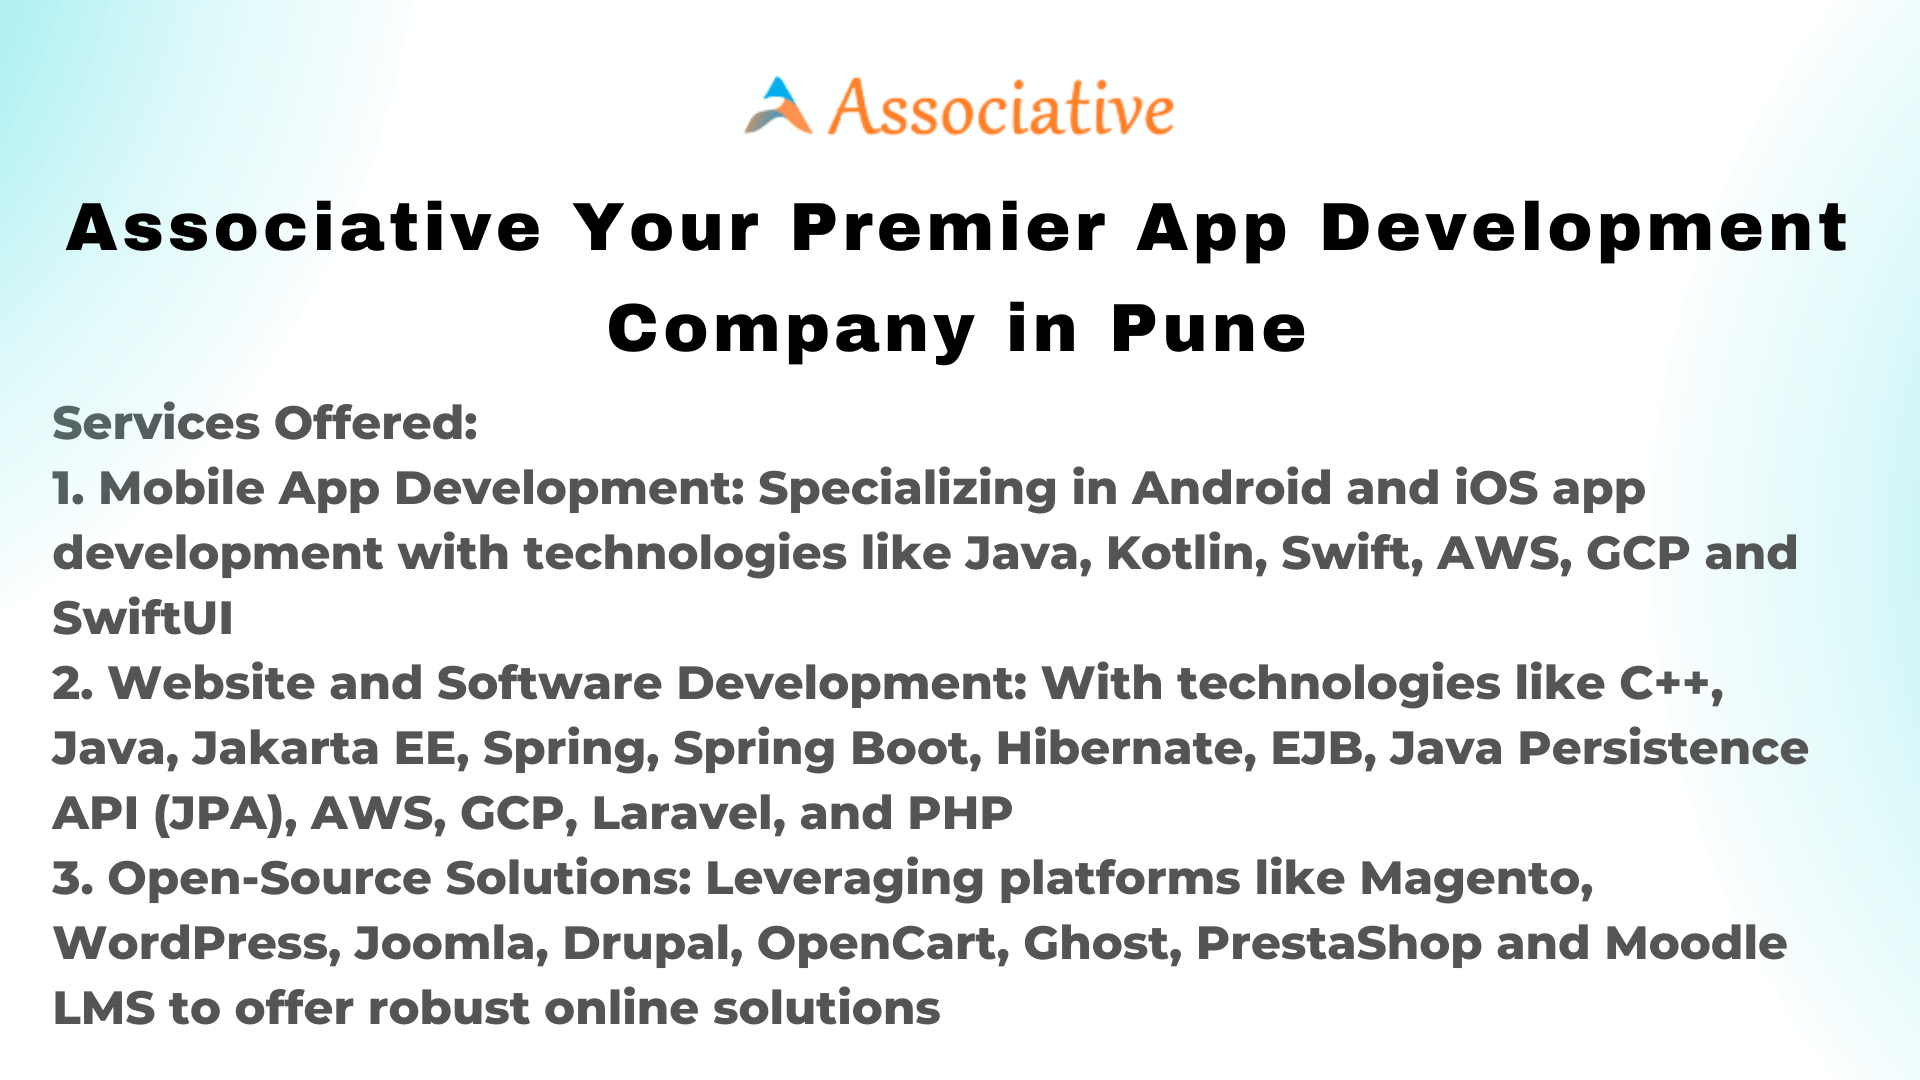 Associative Your Premier App Development Company in Pune